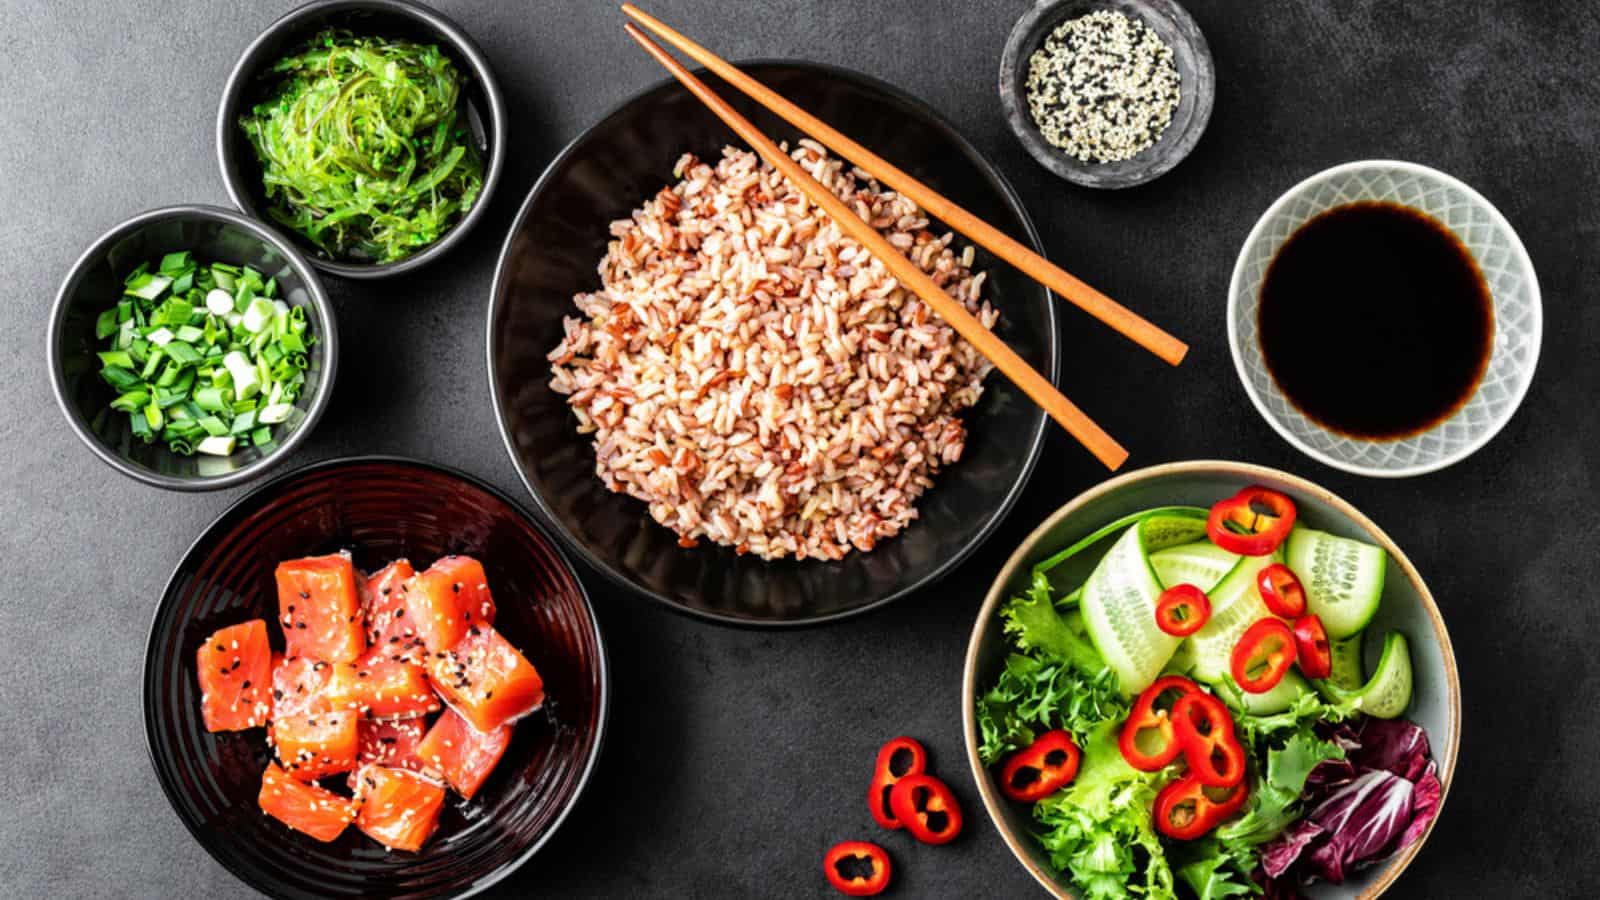 Poke bowl ingredients - brown rice, trout or salmon fille